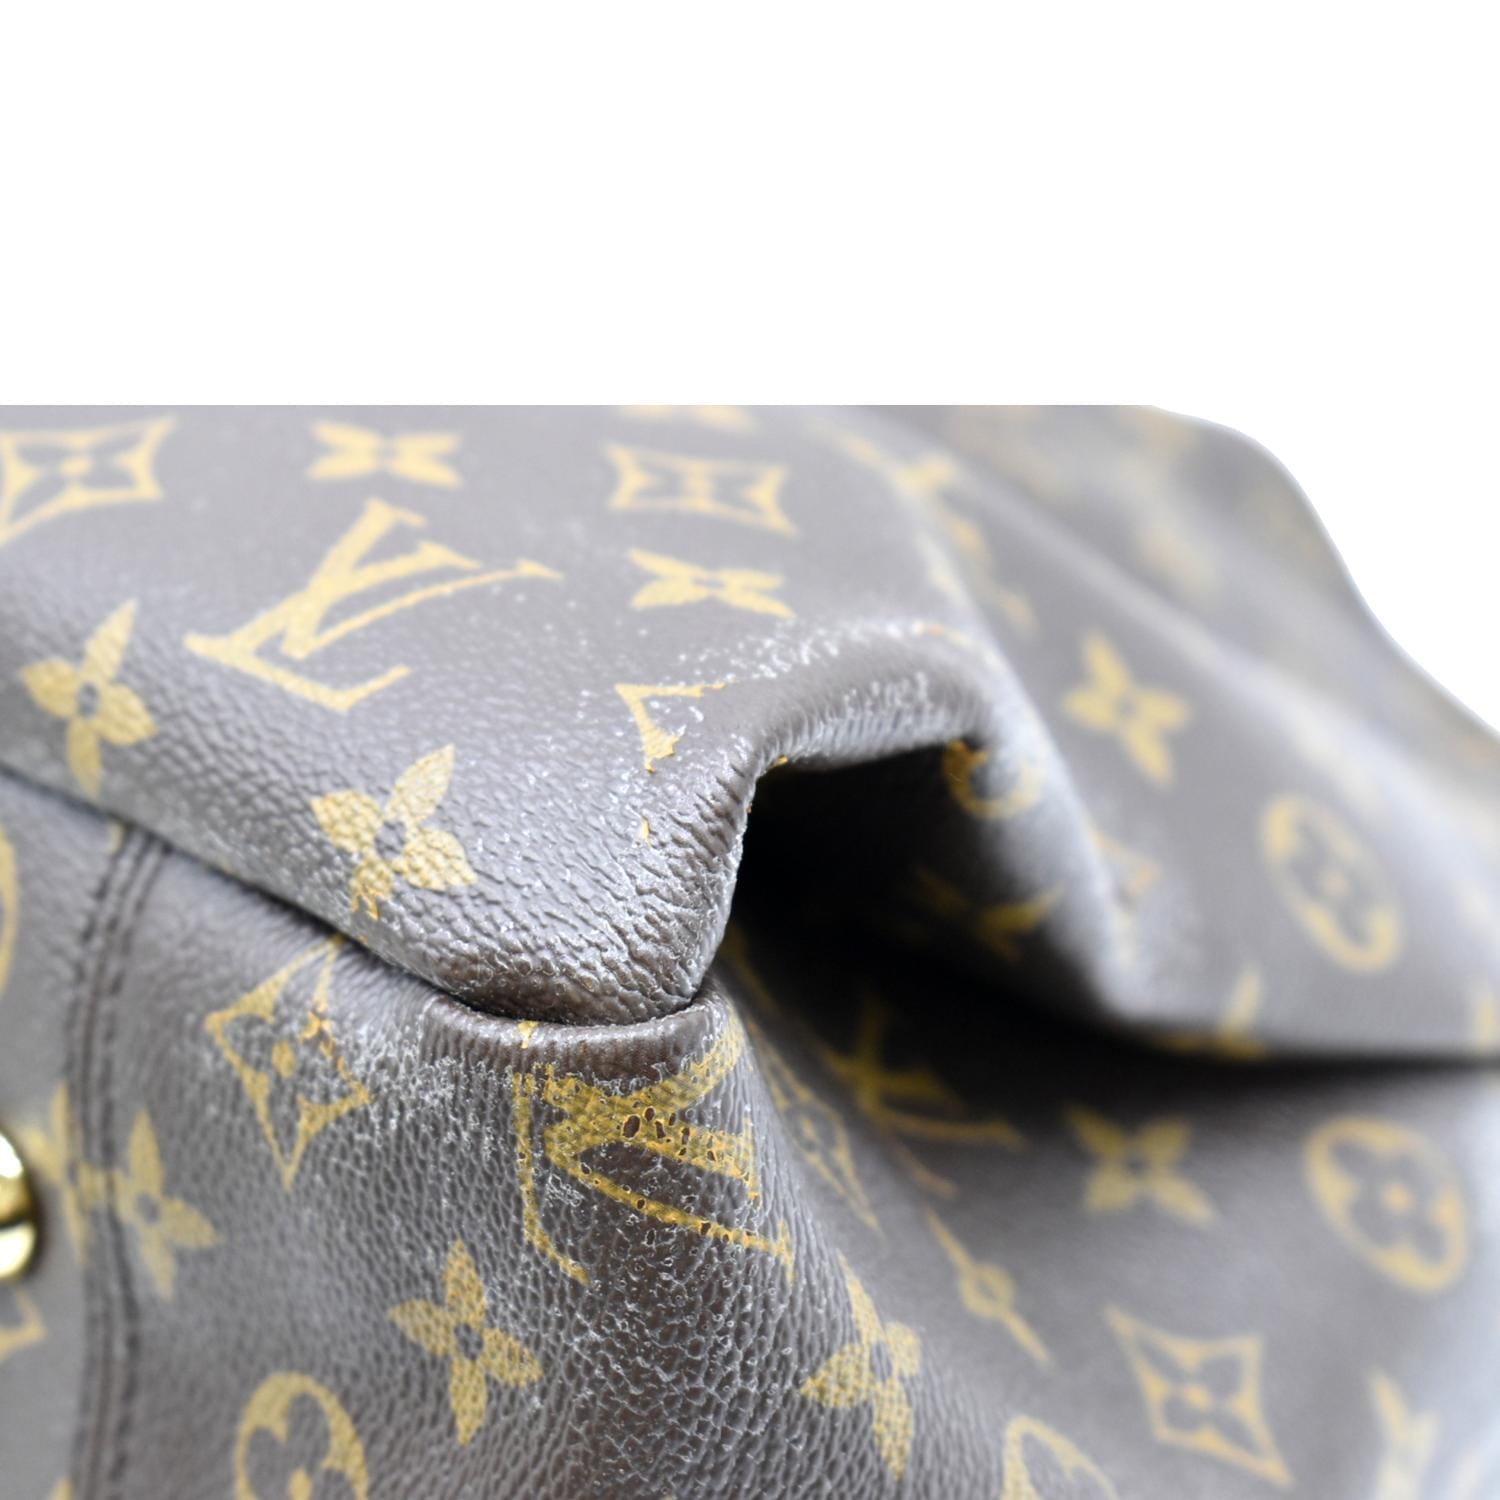 Louis Vuitton Artsy MM Hobo bag in dark blue monogram calfskin leather, GHW  at 1stDibs